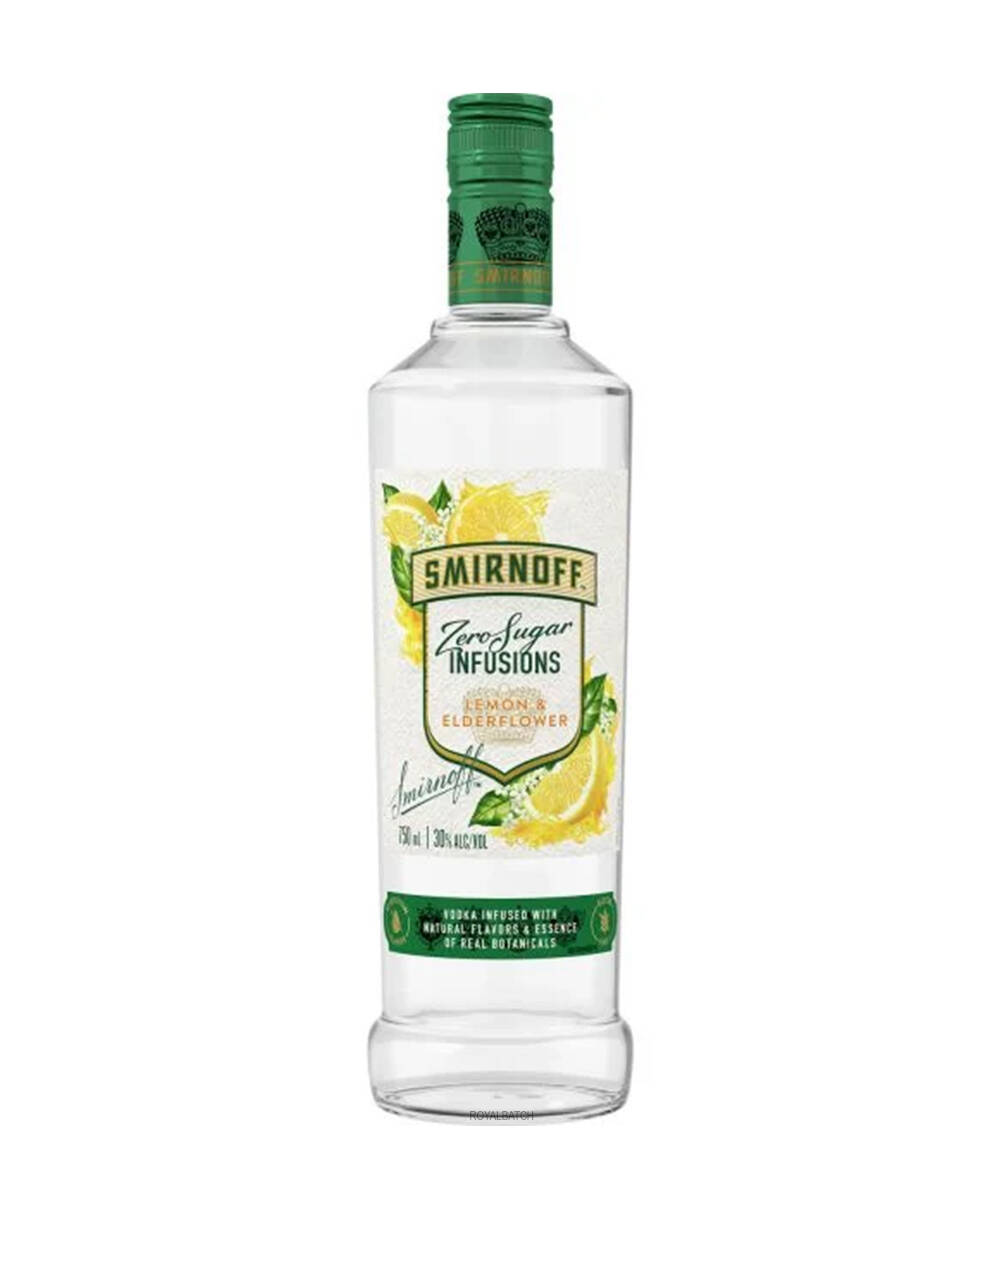 Smirnoff Zero Sugar Infusions Lemon and Elderflower Vodka